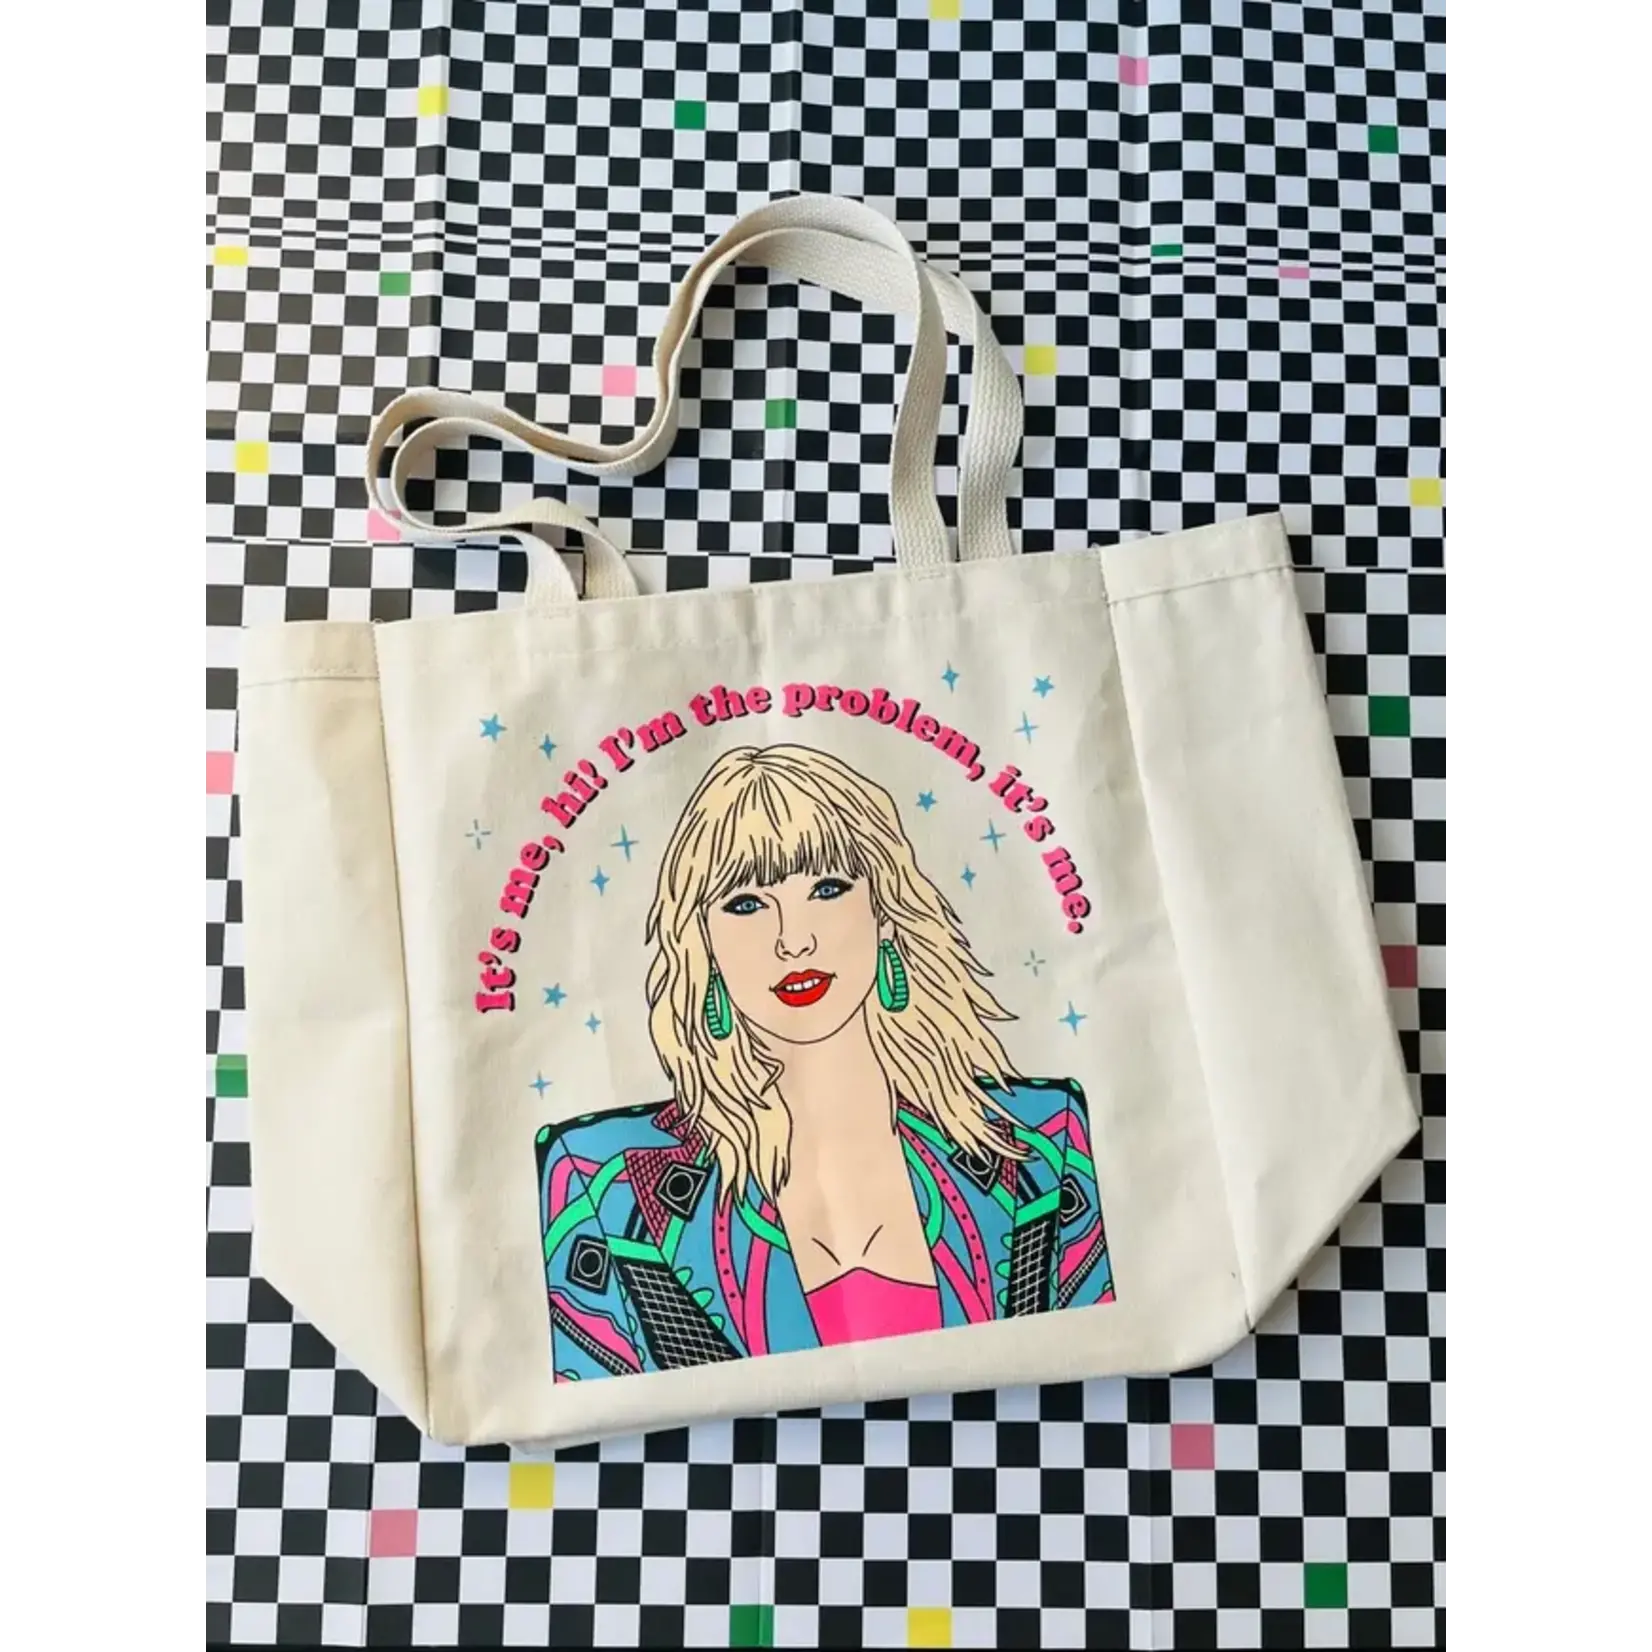 Taylor Swift "It's Me, Hi!" Tote Bag